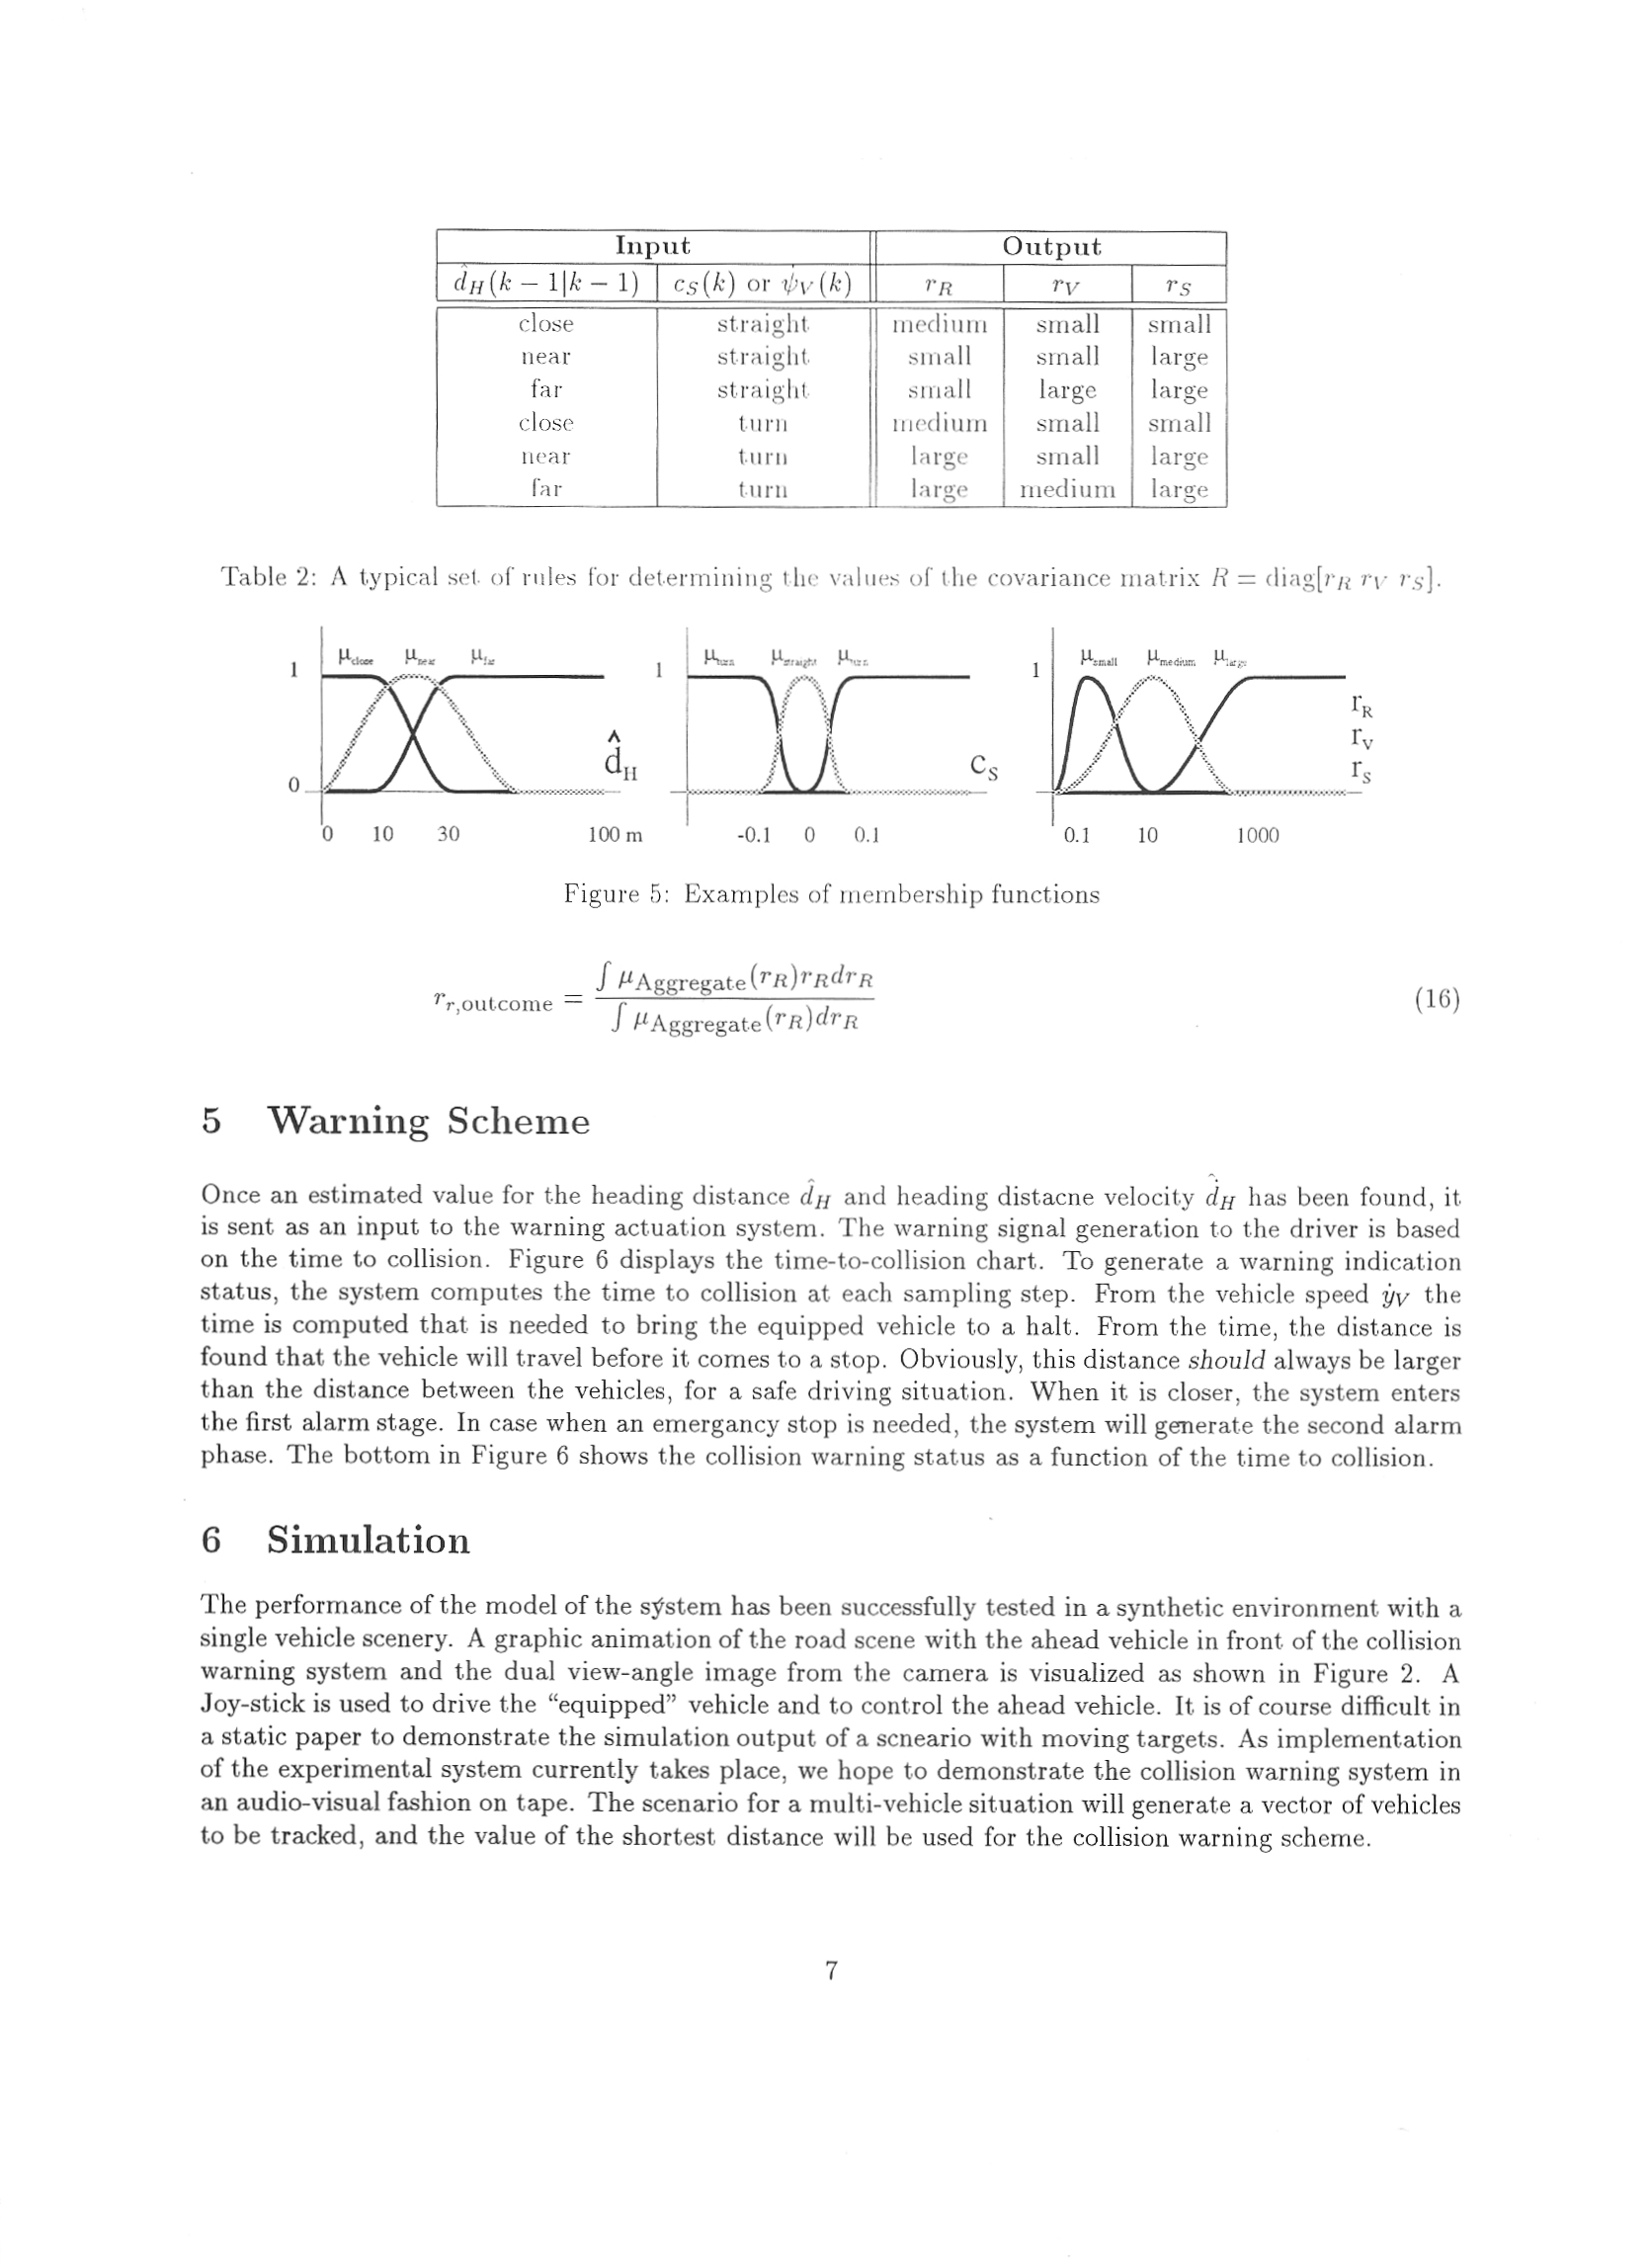 Warning scheme and simulation